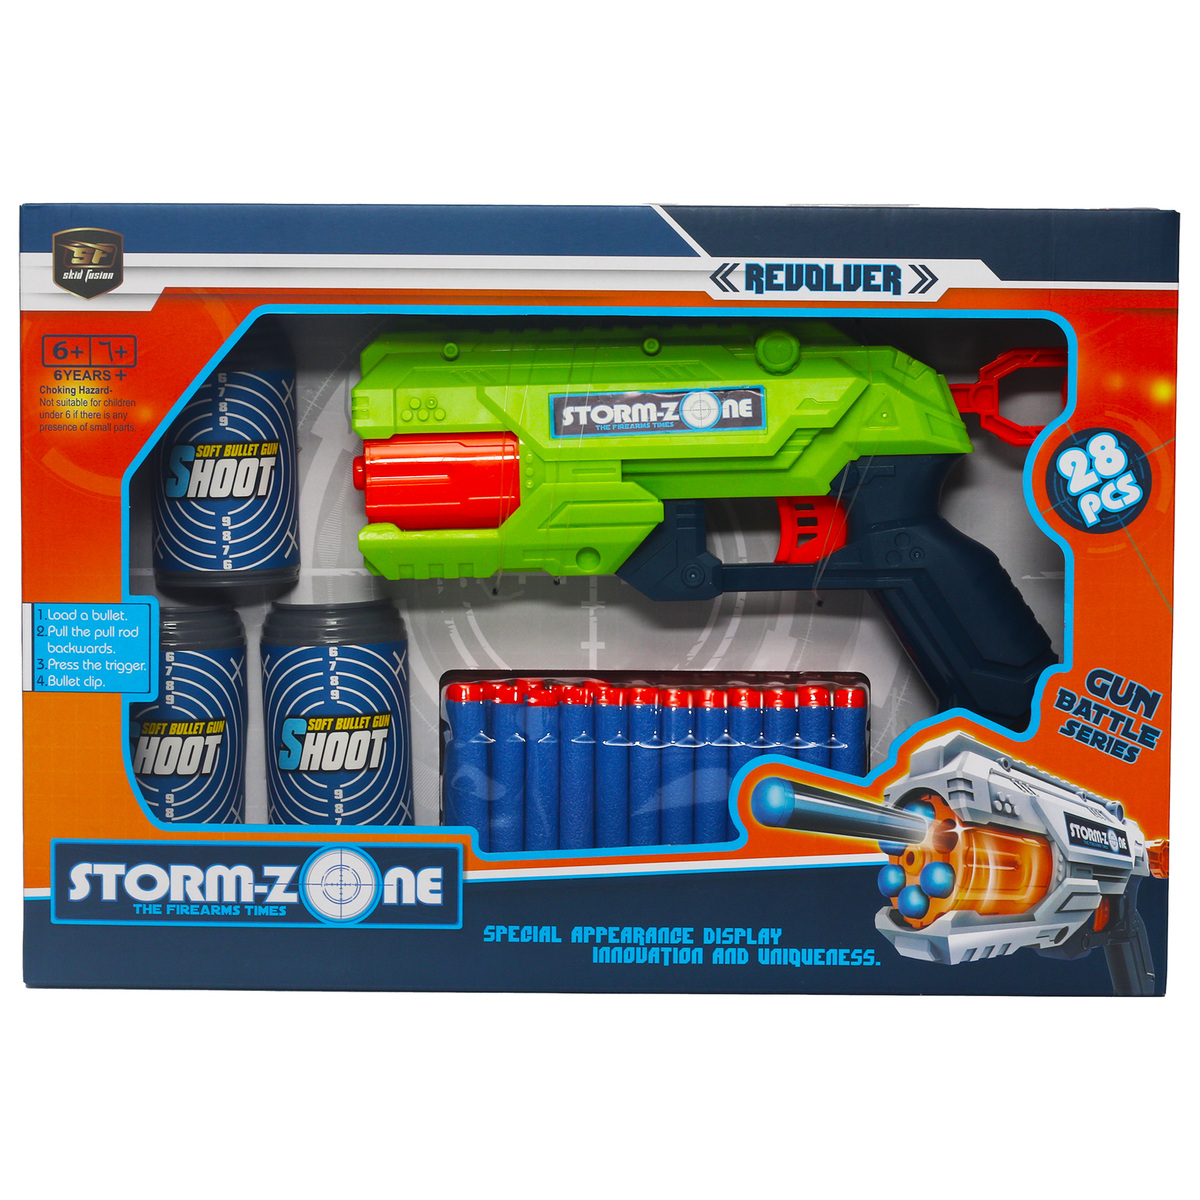 Skid Fusion Storm Zone Soft Gun Z1136-1